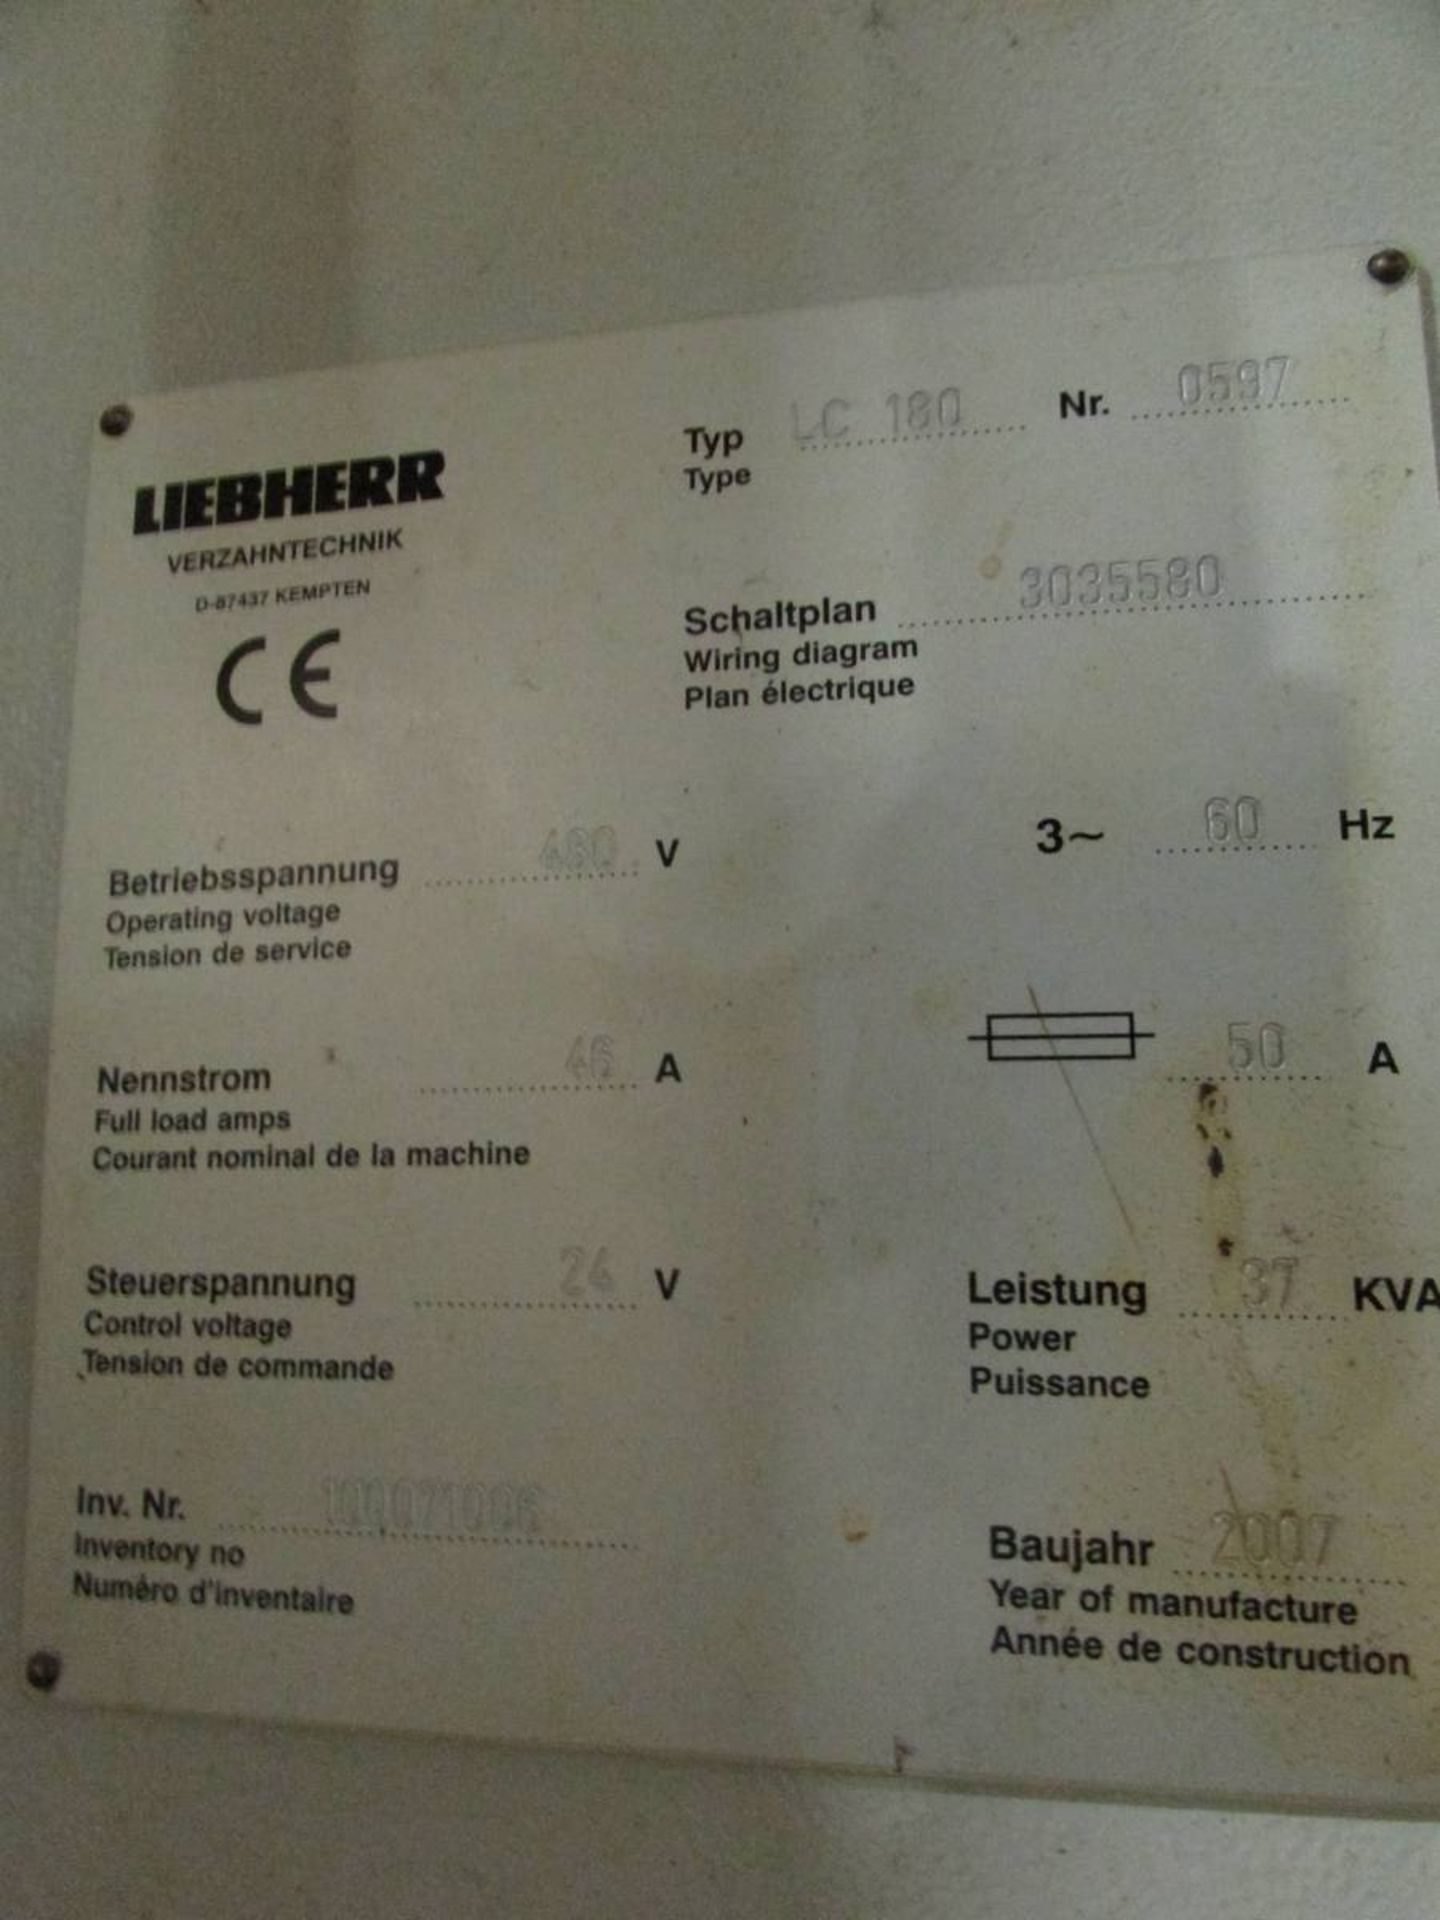 2007 Liebherr LC 180 CNC Gear Hobbing Machine - Image 18 of 19